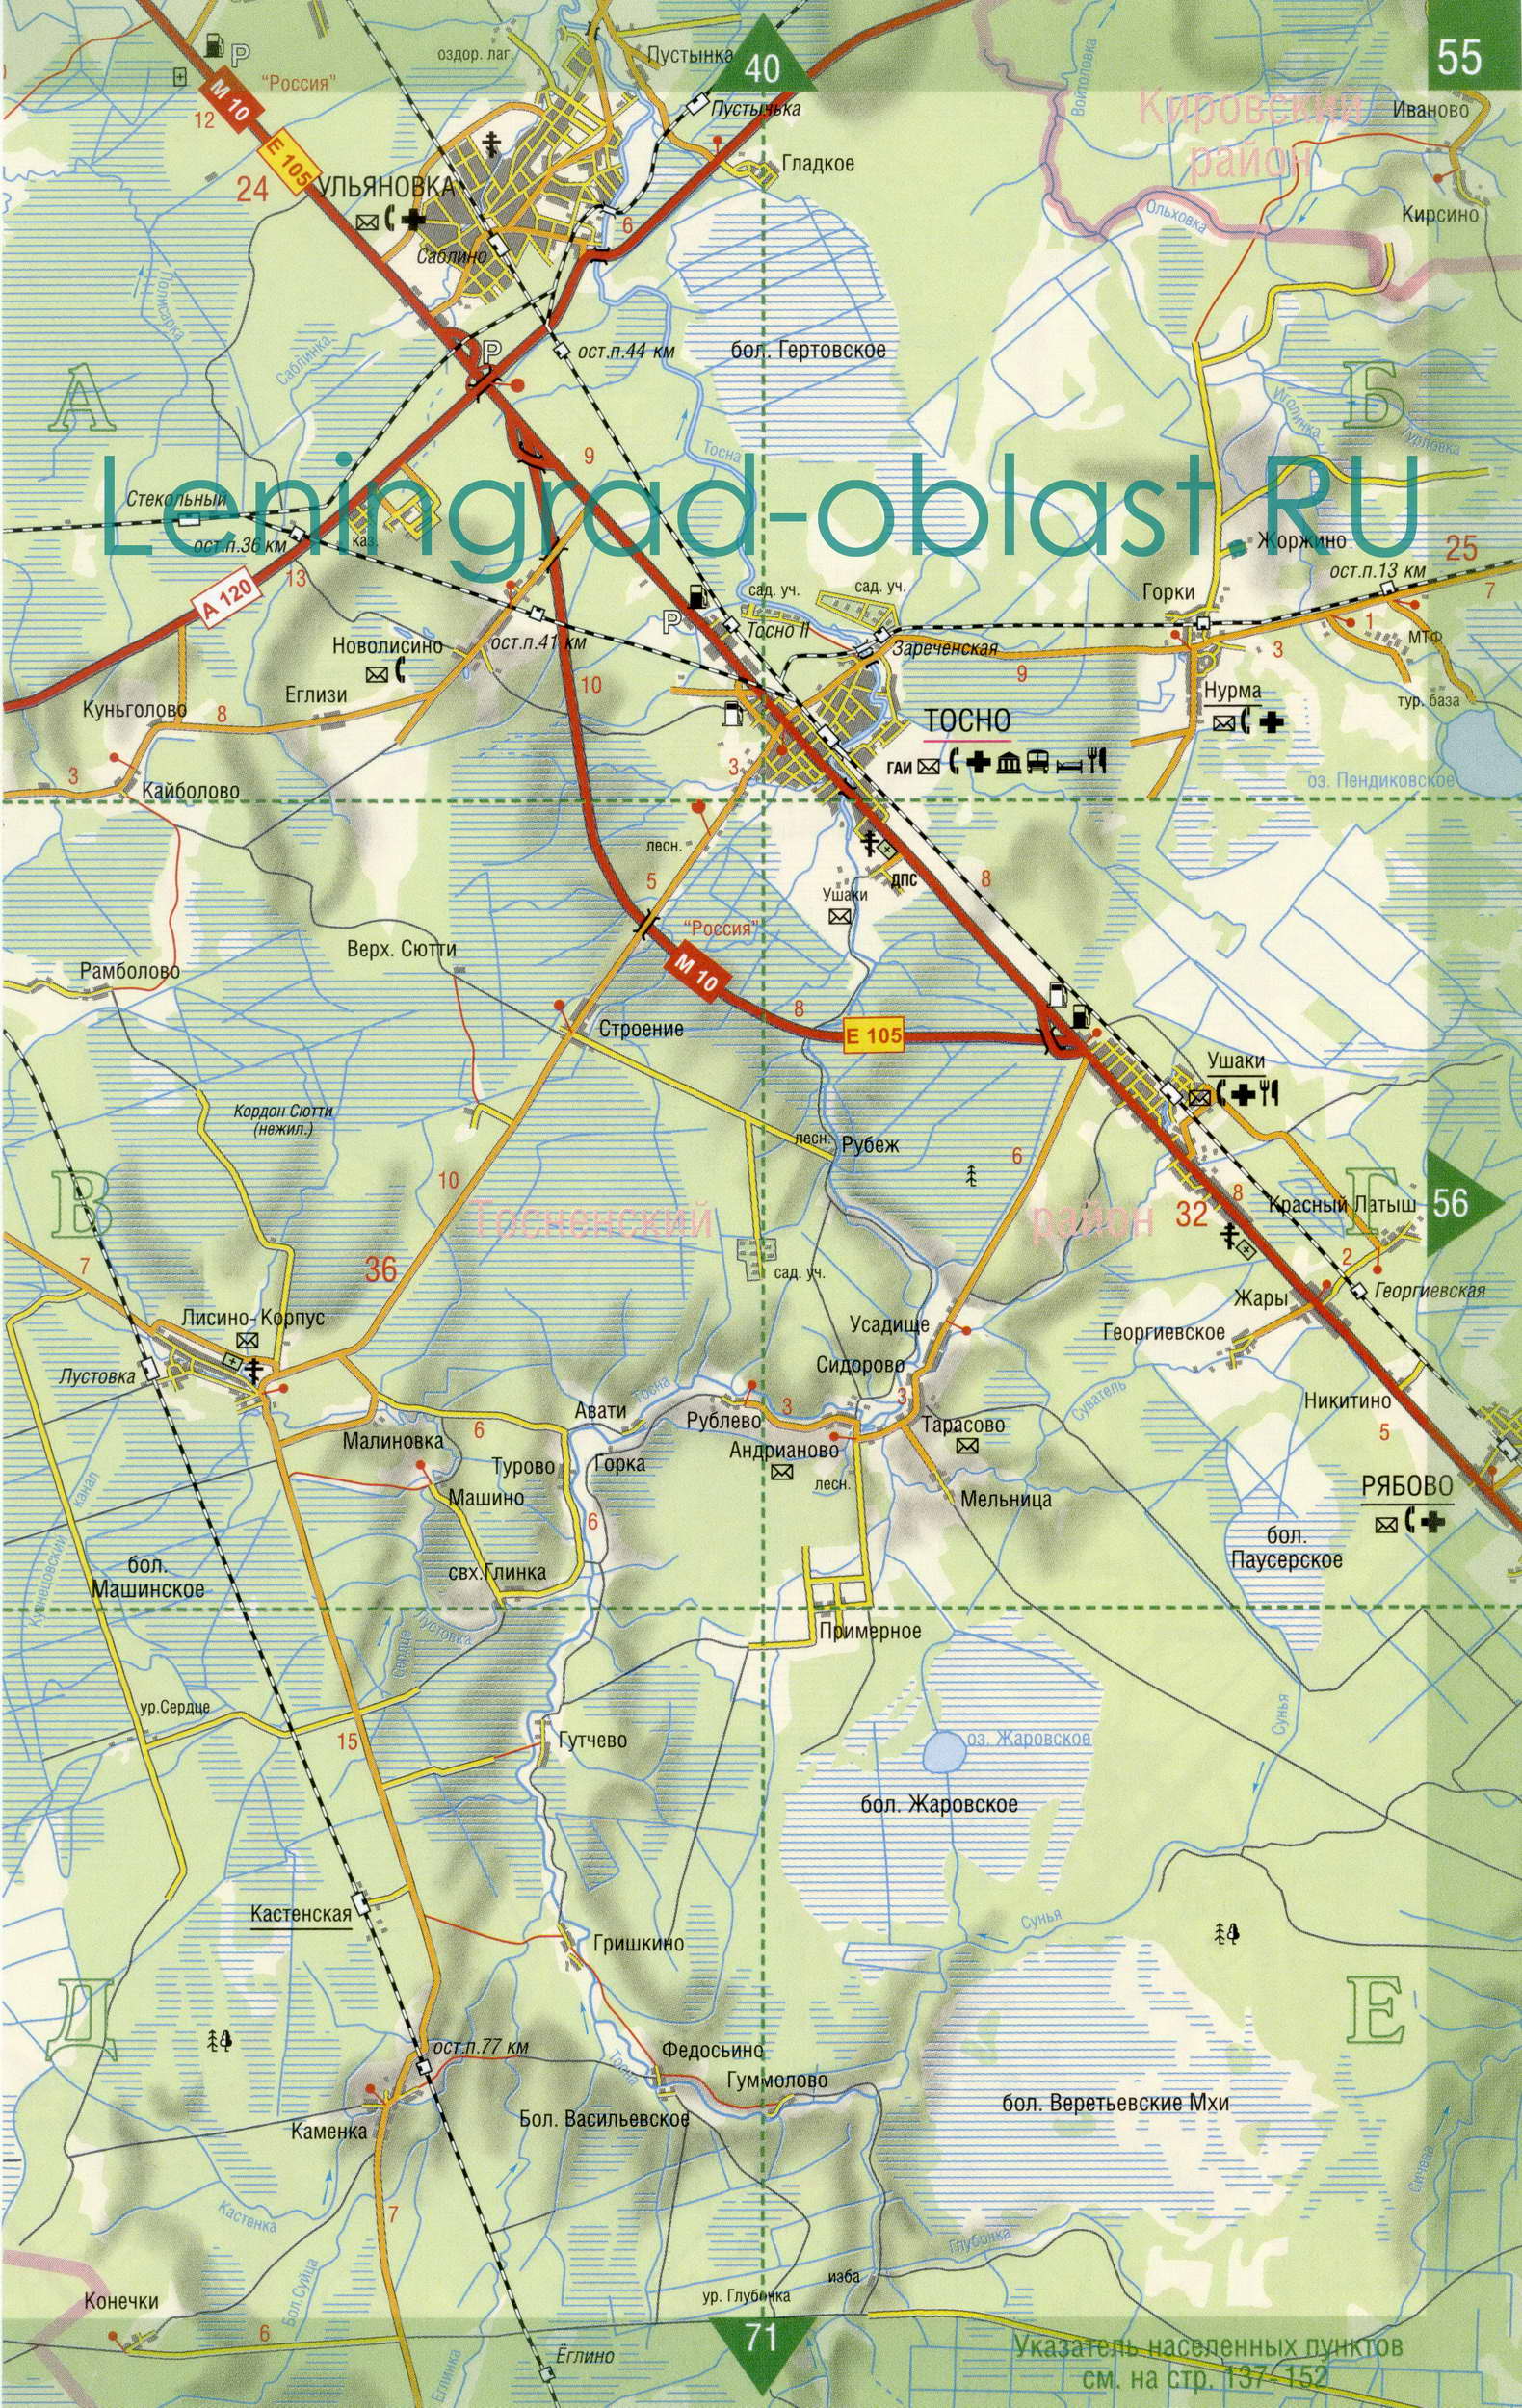 Карта Тосненского района Ленобласти. Карта Ленинградской области - Тосненский район, A0 - 